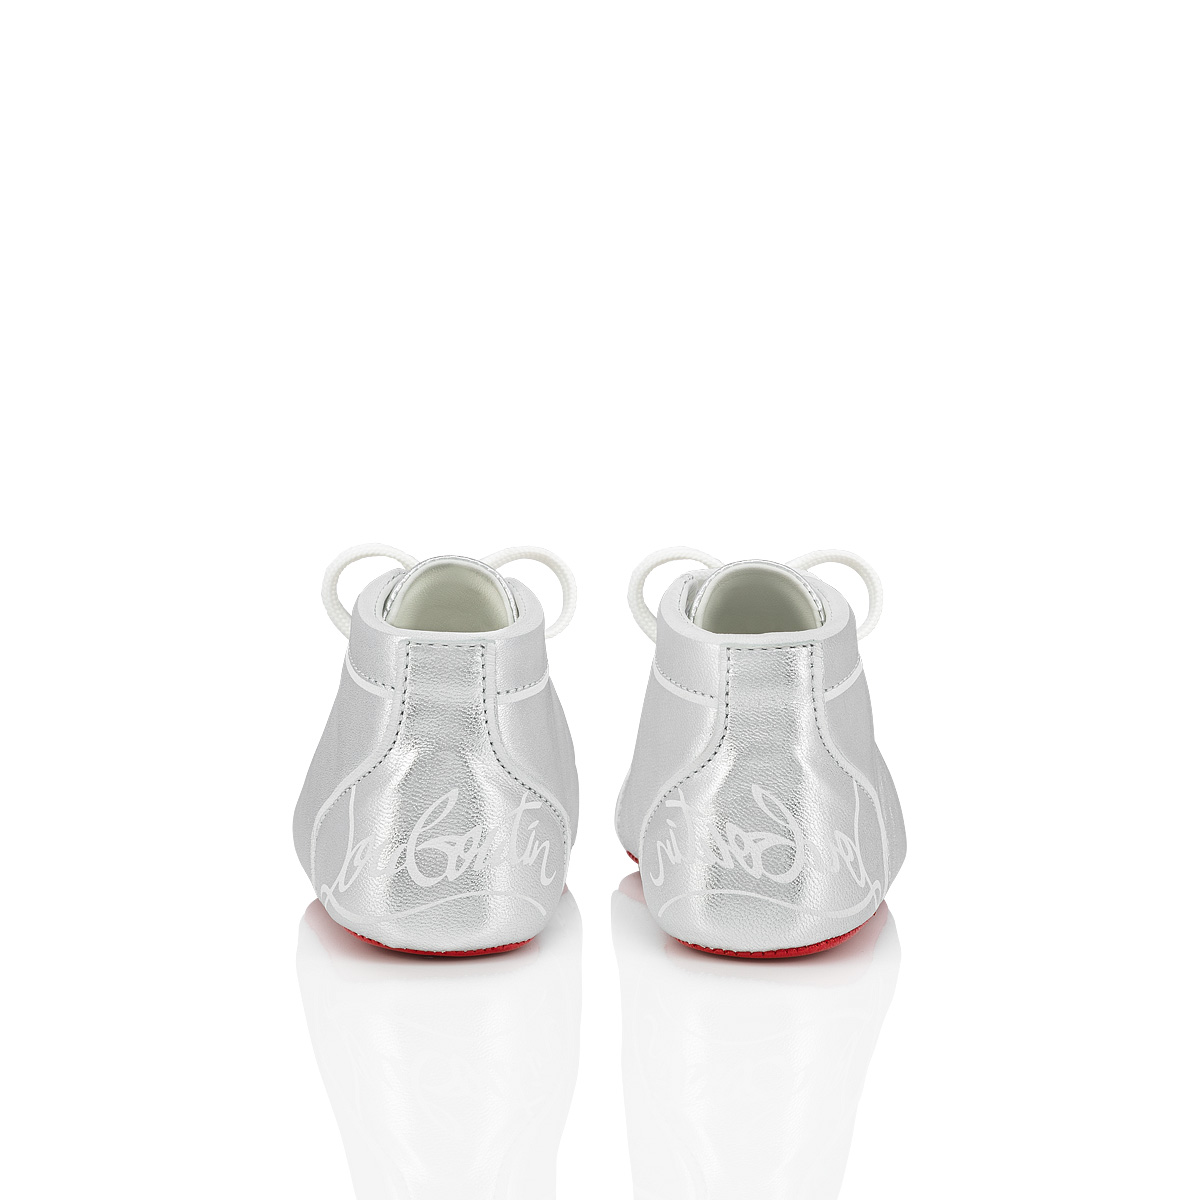 Christian Louboutin Funnyto - Kids Unisexs Shoes - Size 35